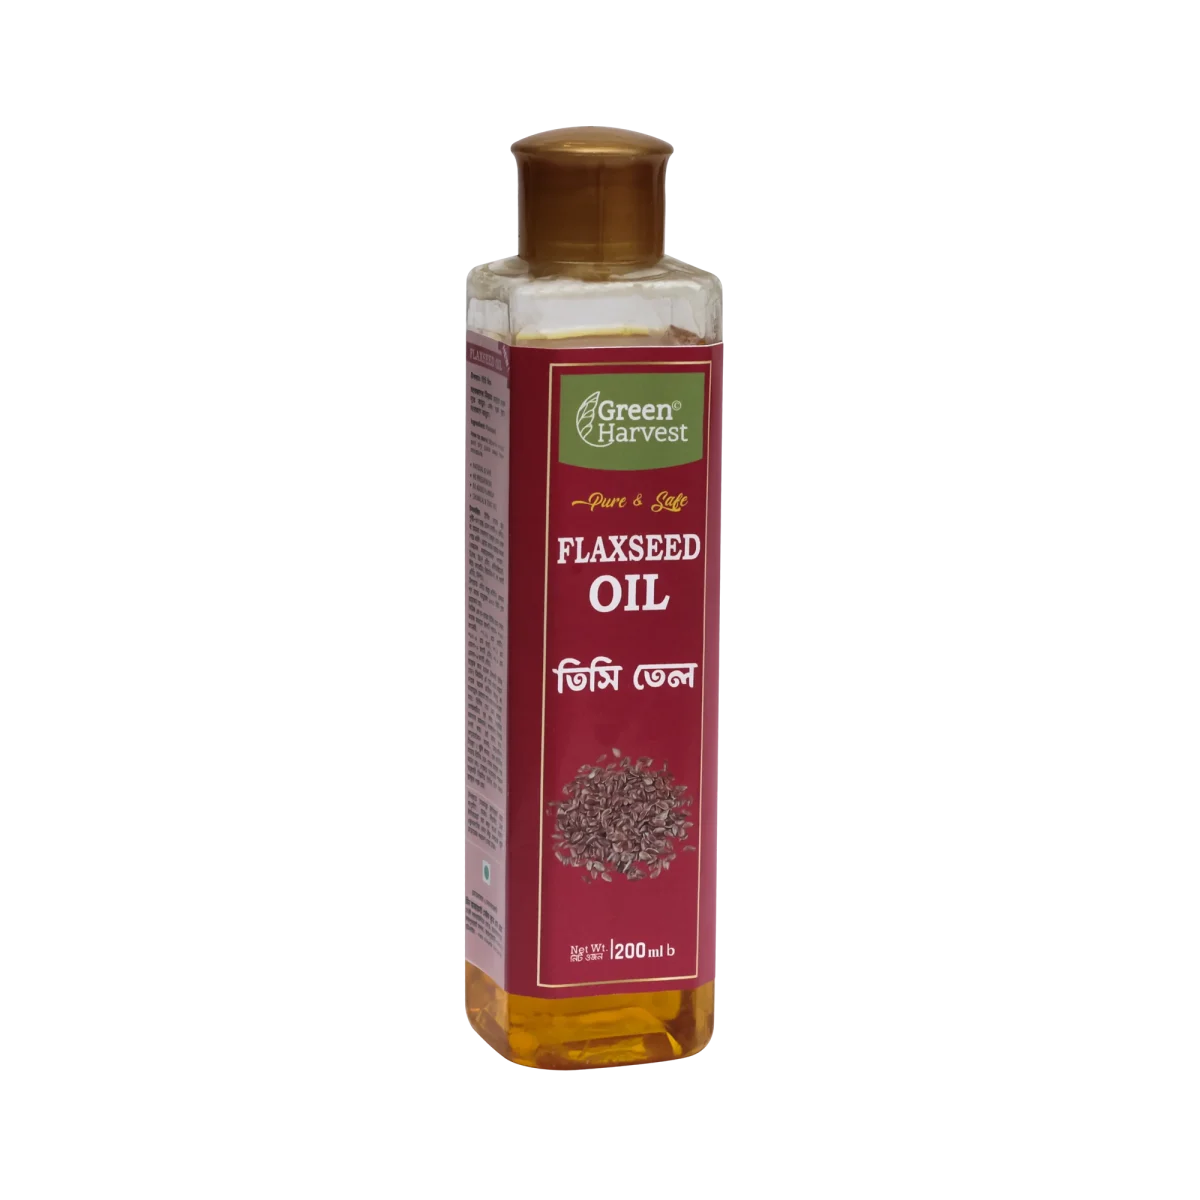 Flaxseed Oil – তিশির তেল